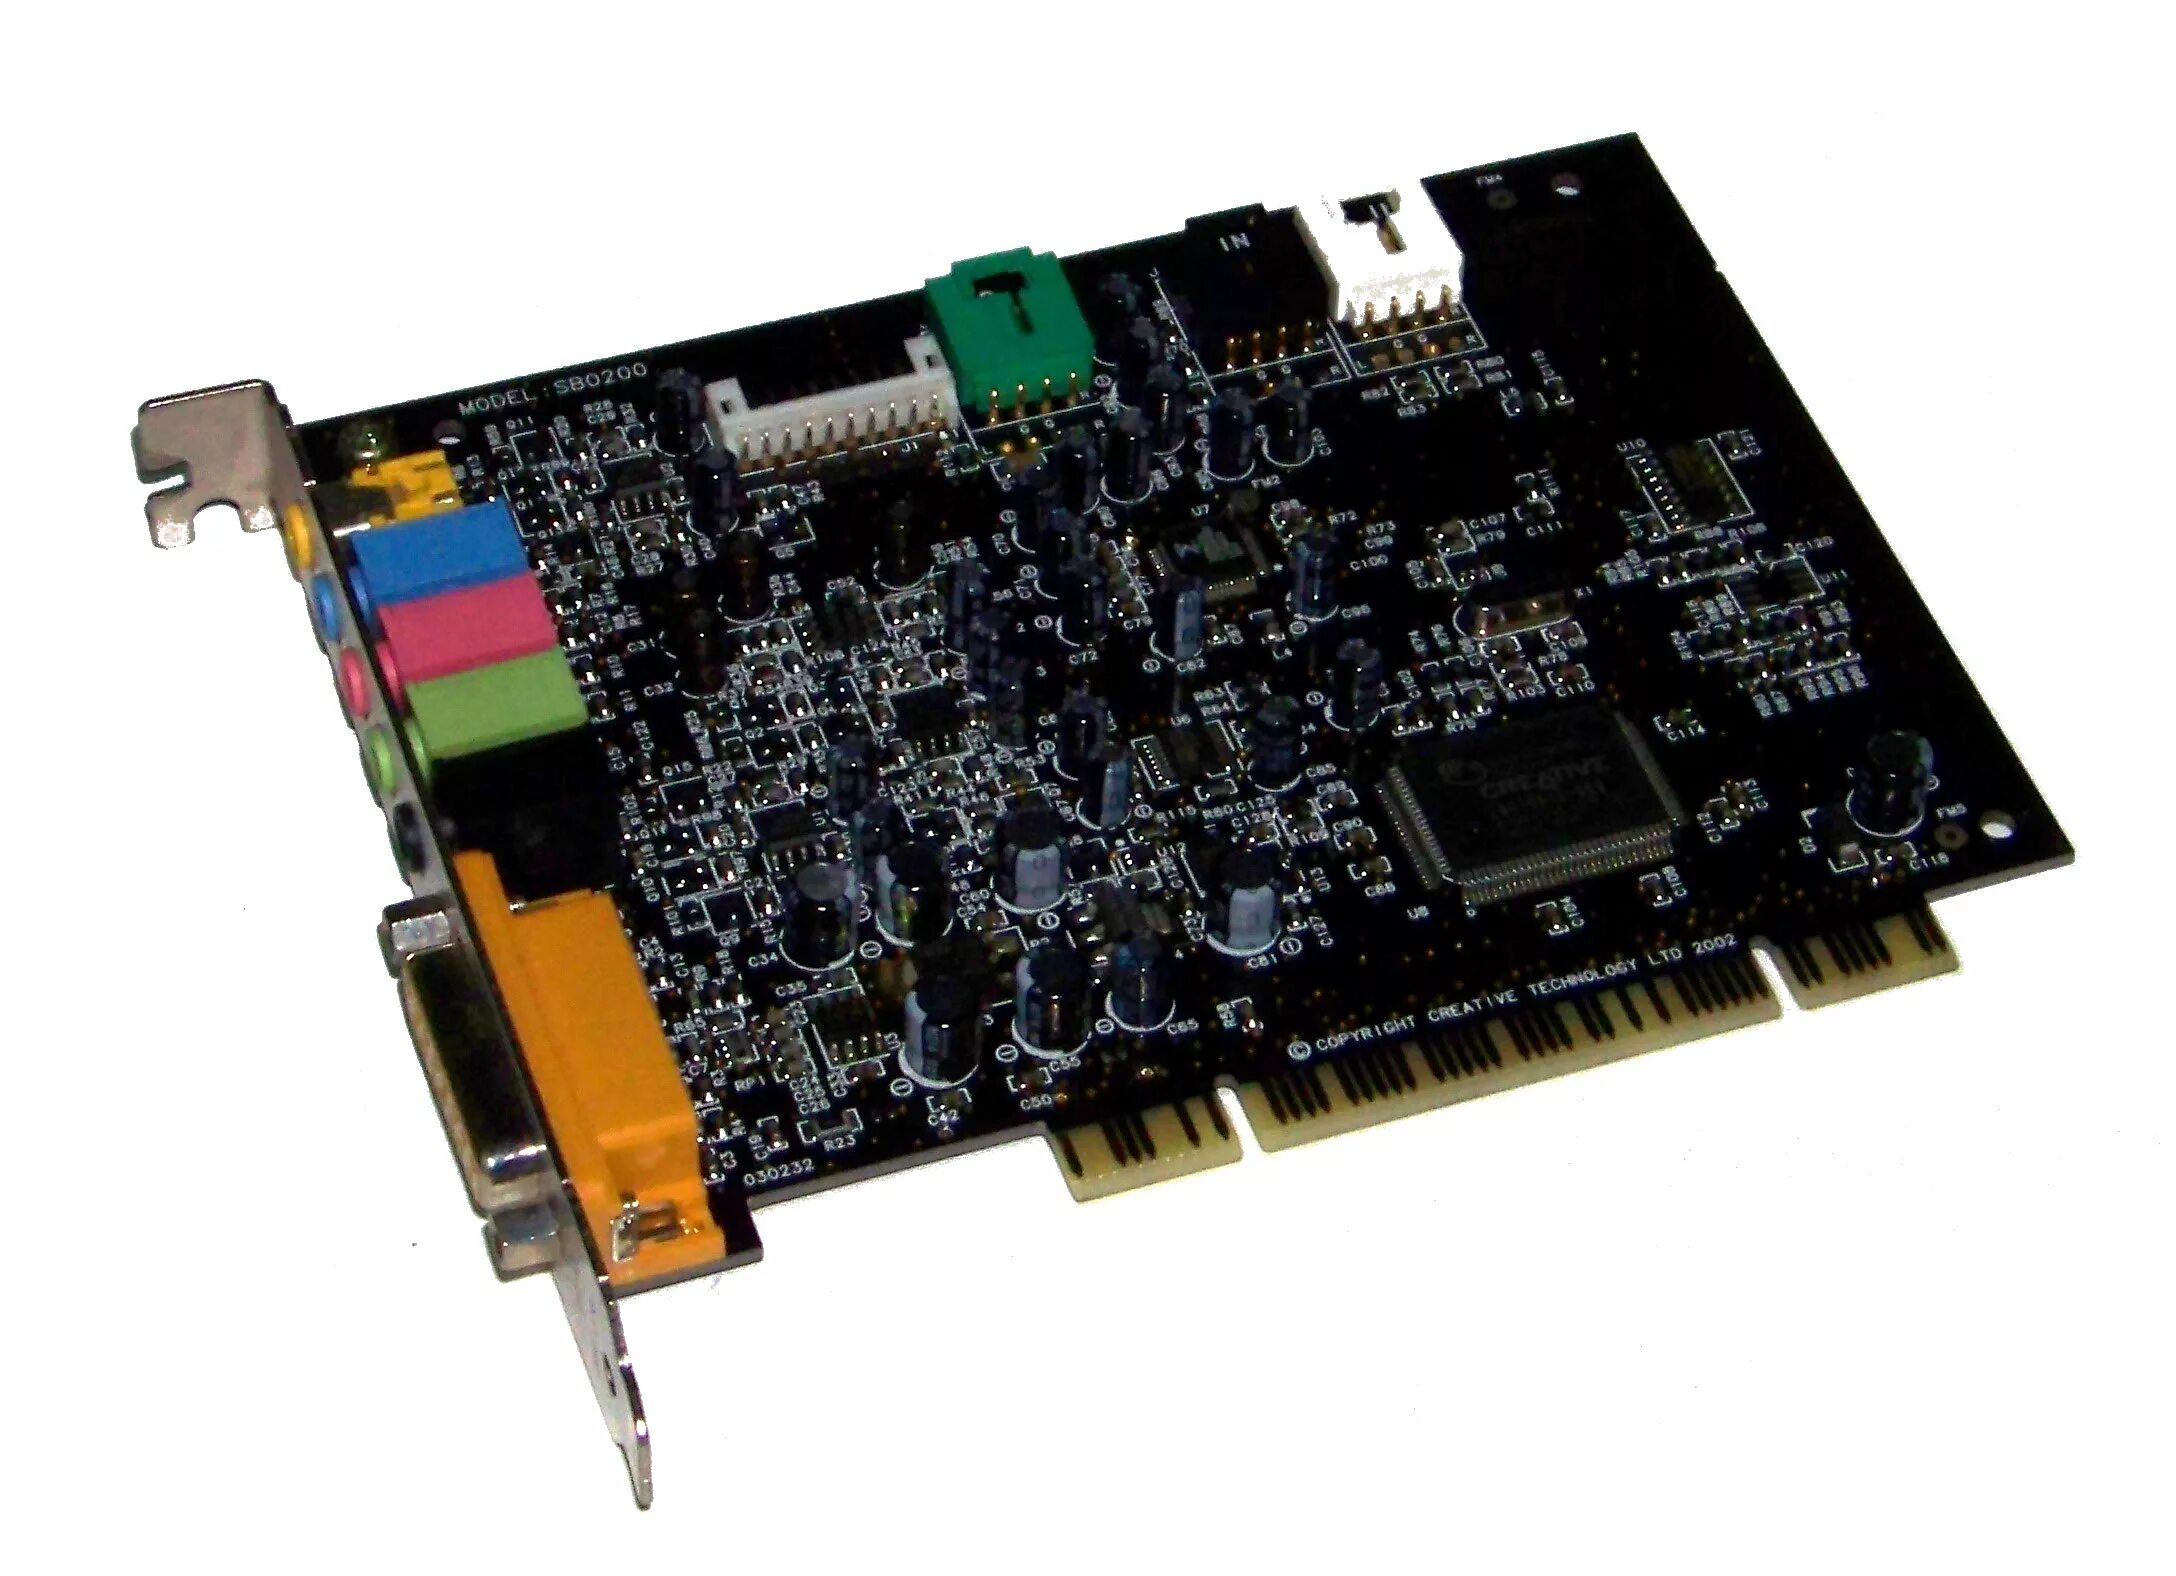 Звуковая карта плата. Creative Labs sb0200. Внутренняя звуковая карта Manhattan PCI Sound Card 5.1. Внутренняя звуковая карта Manhattan PCI Sound Card 7.1. PCI-E 3.0 x8 звуковая карта.